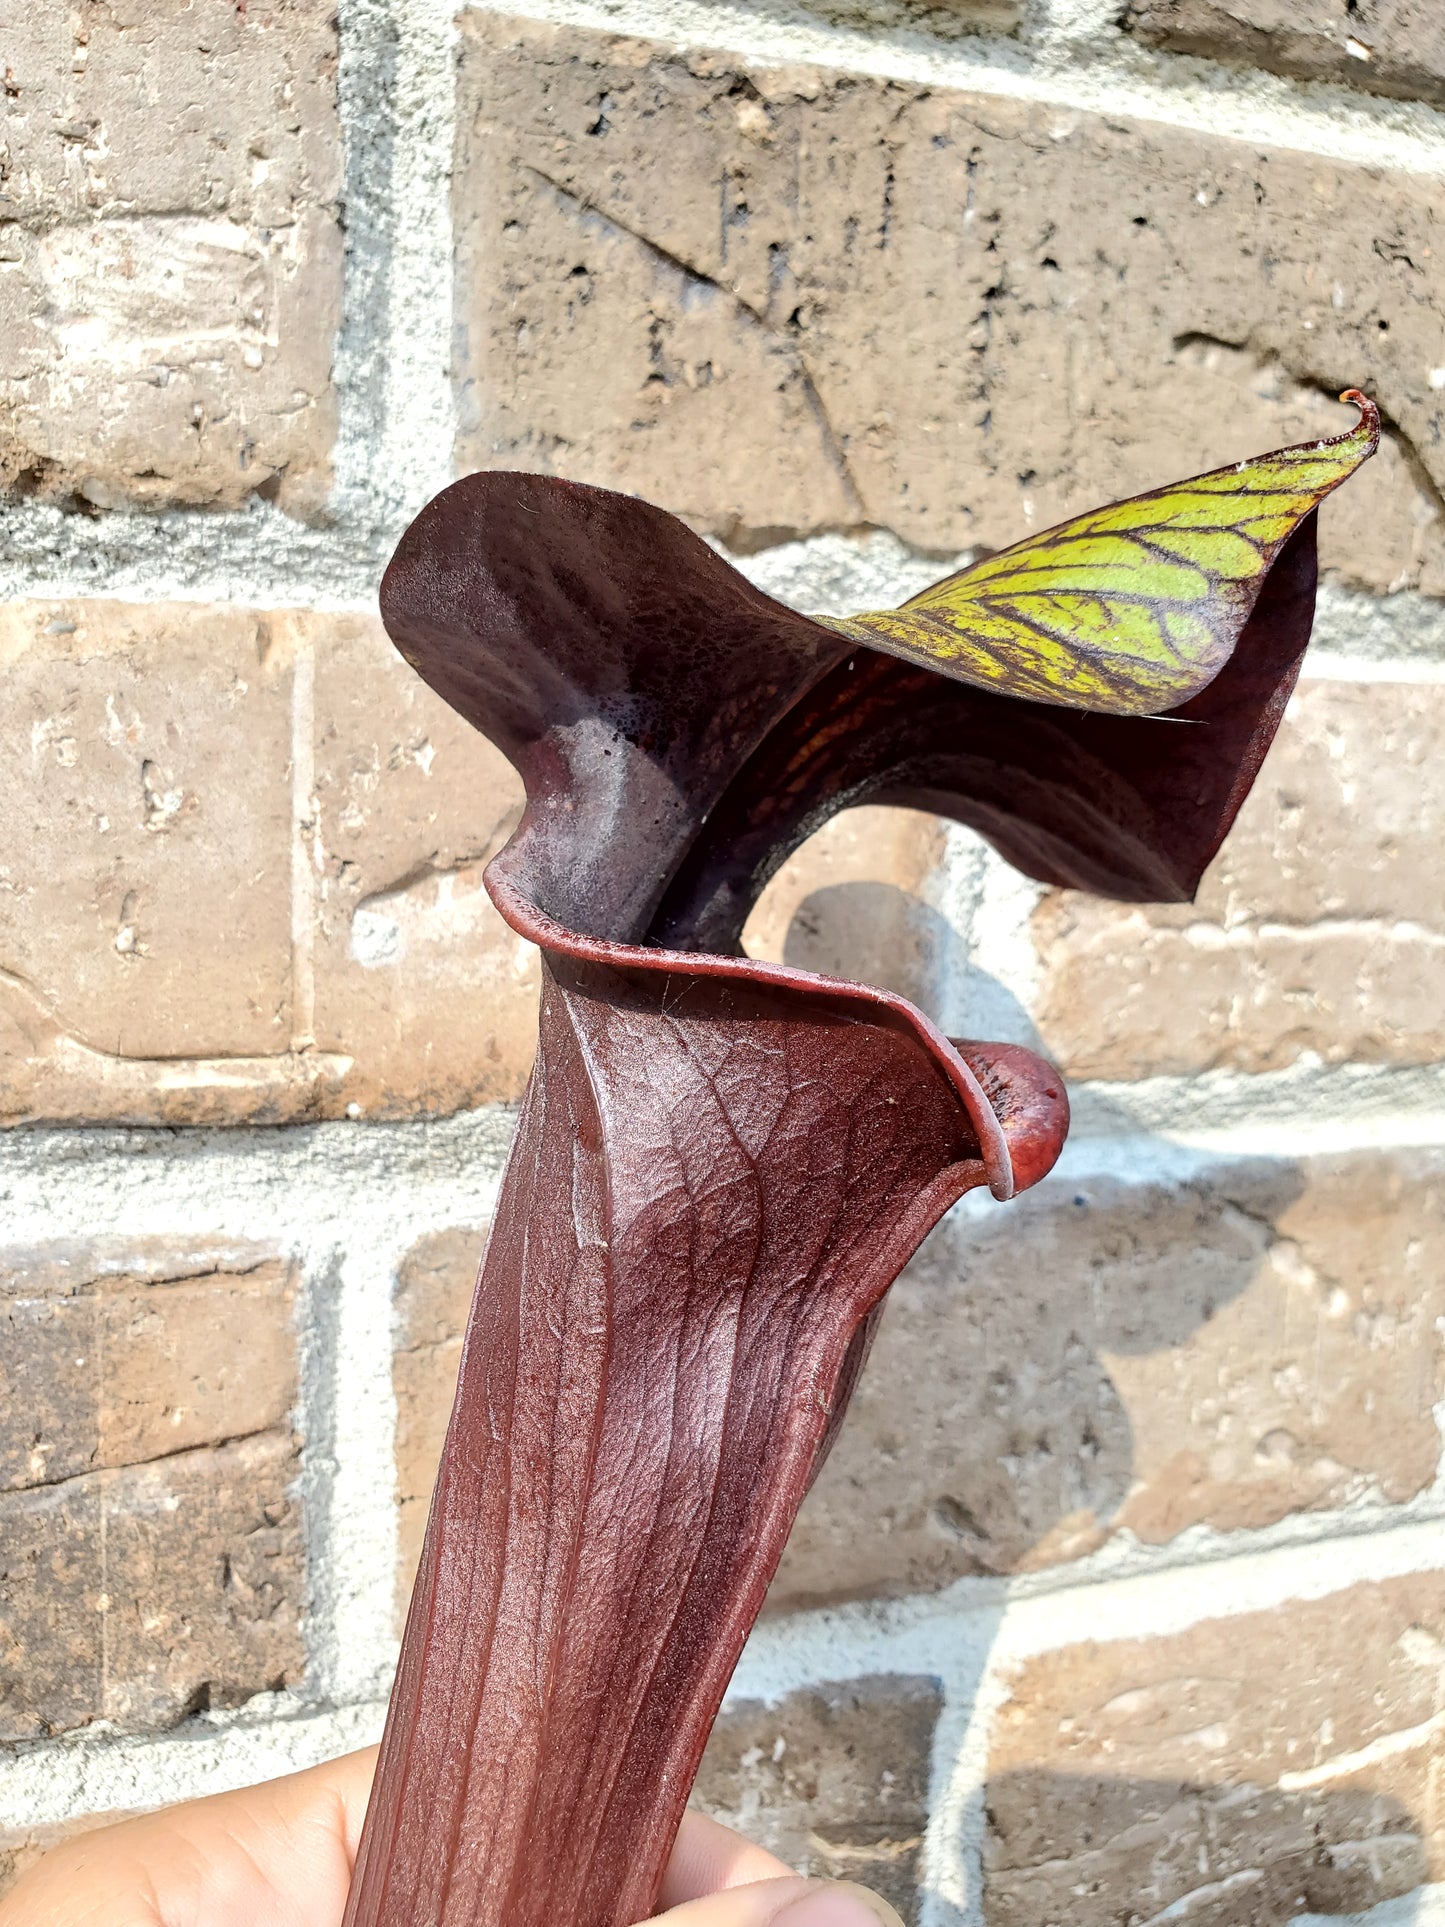 Pitcher Plant - Sarracenia Black Widow Carnivorous Plant